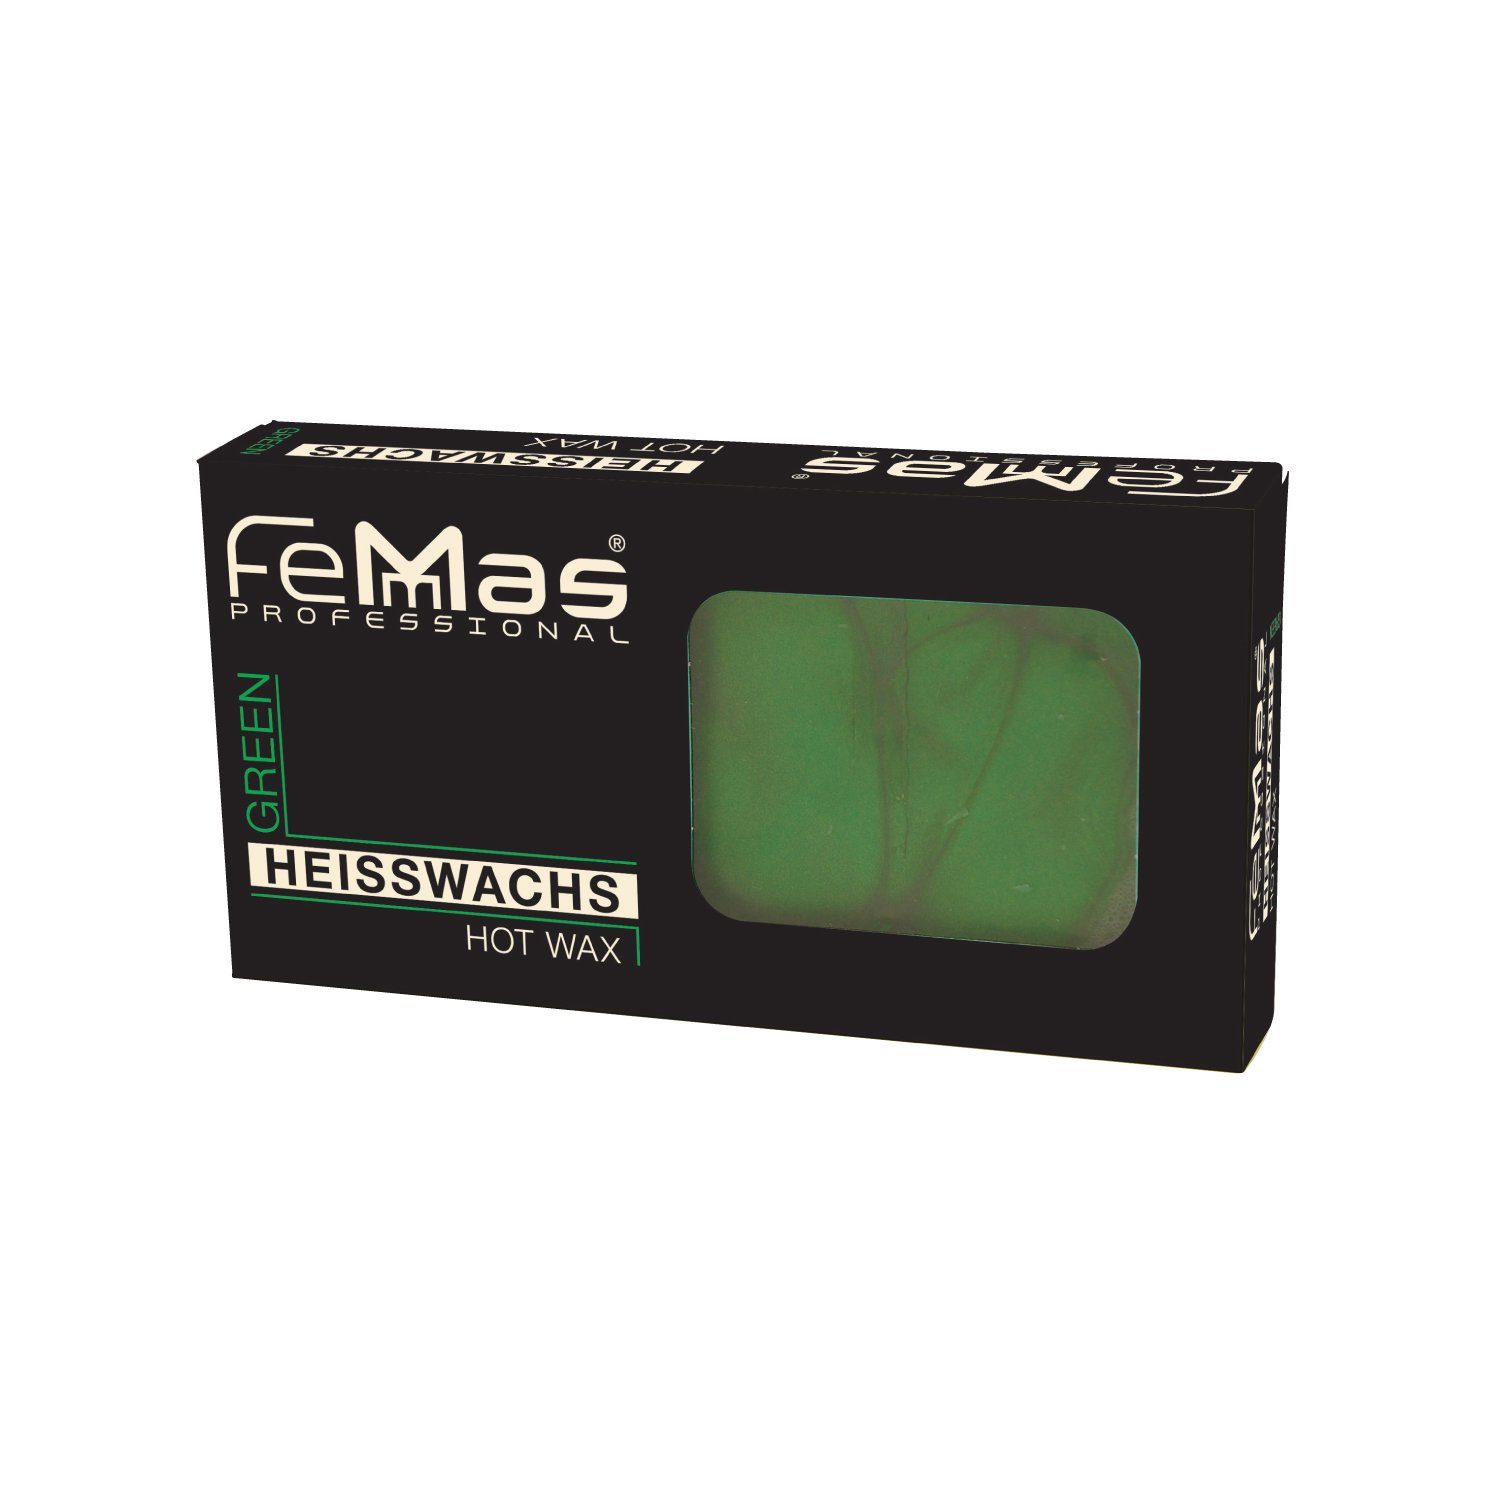 Heisswachs Enthaarungswachs Premium Femmas FemMas 500ml Green